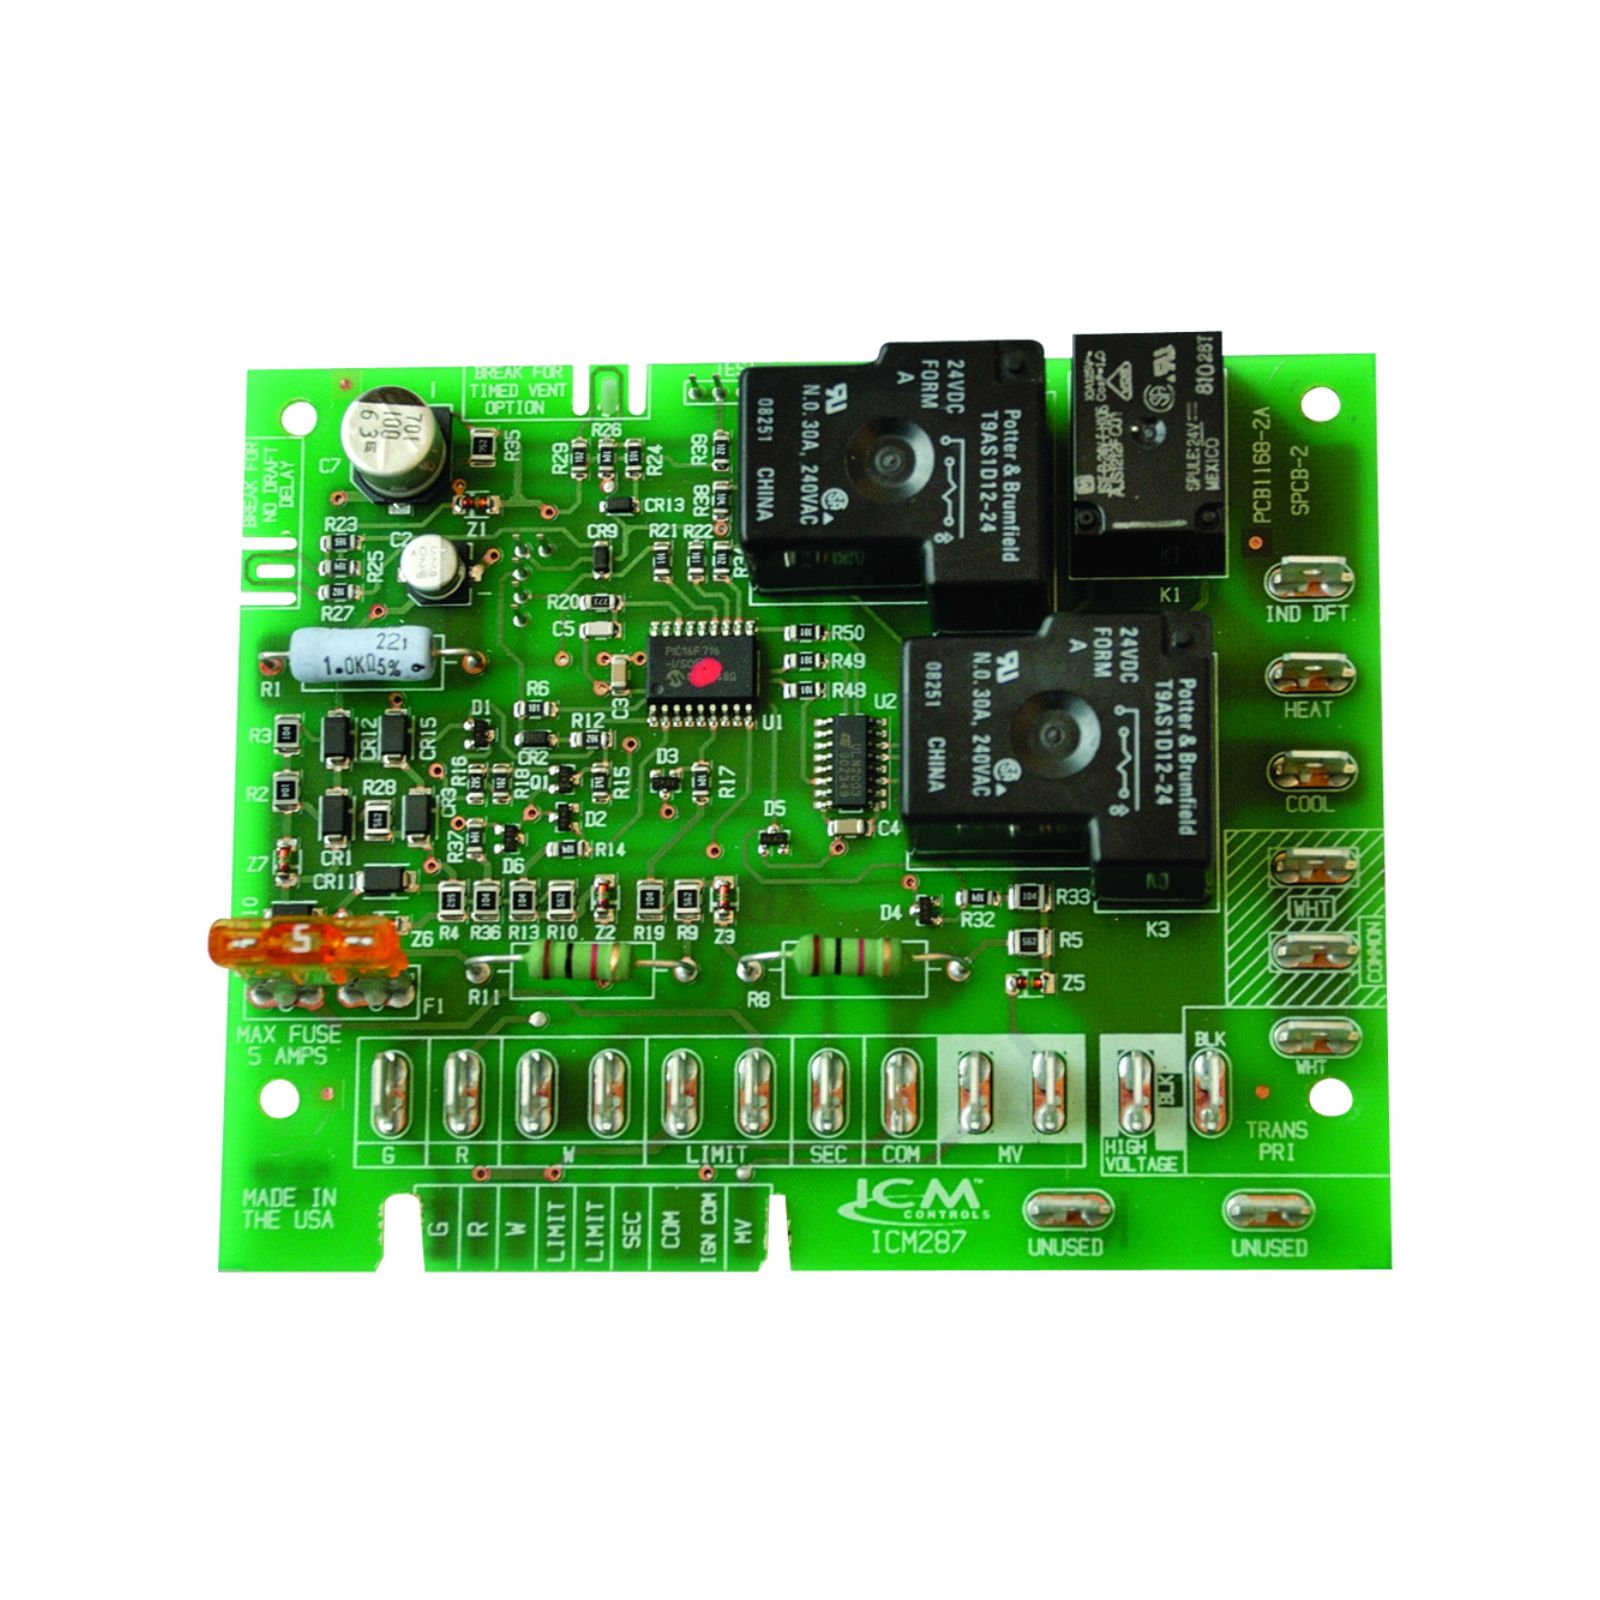 ICM ICM287 - Furnace Control Board, OEM Replacement For Goodman B18099-04